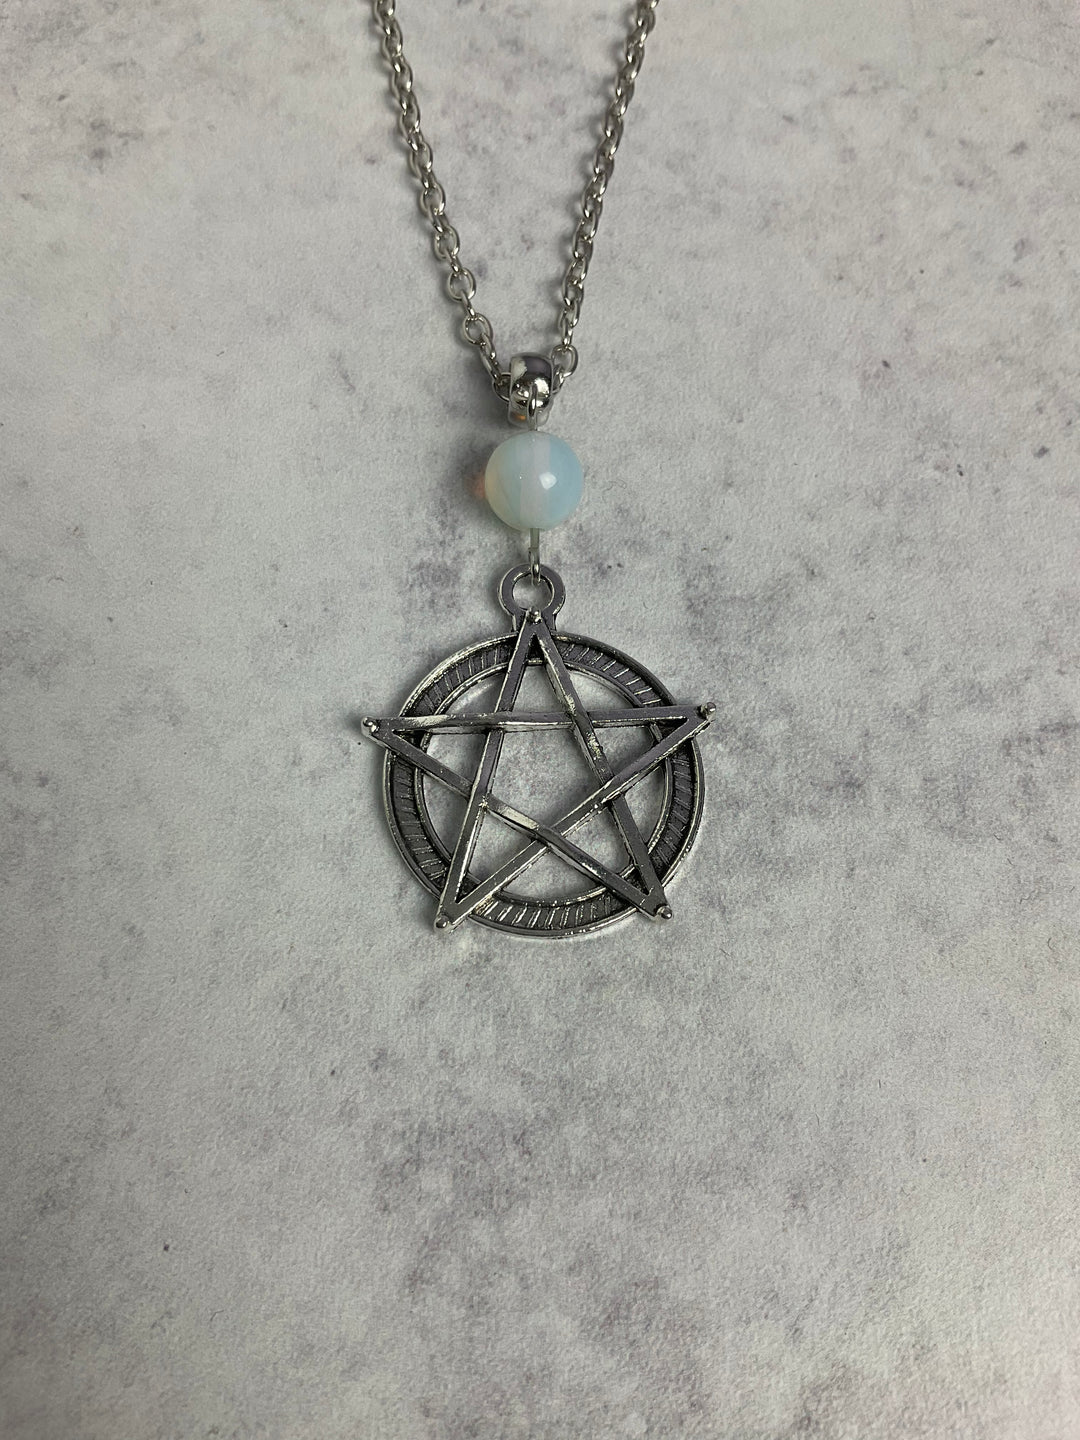 Pentagram with Opalite bead pendant